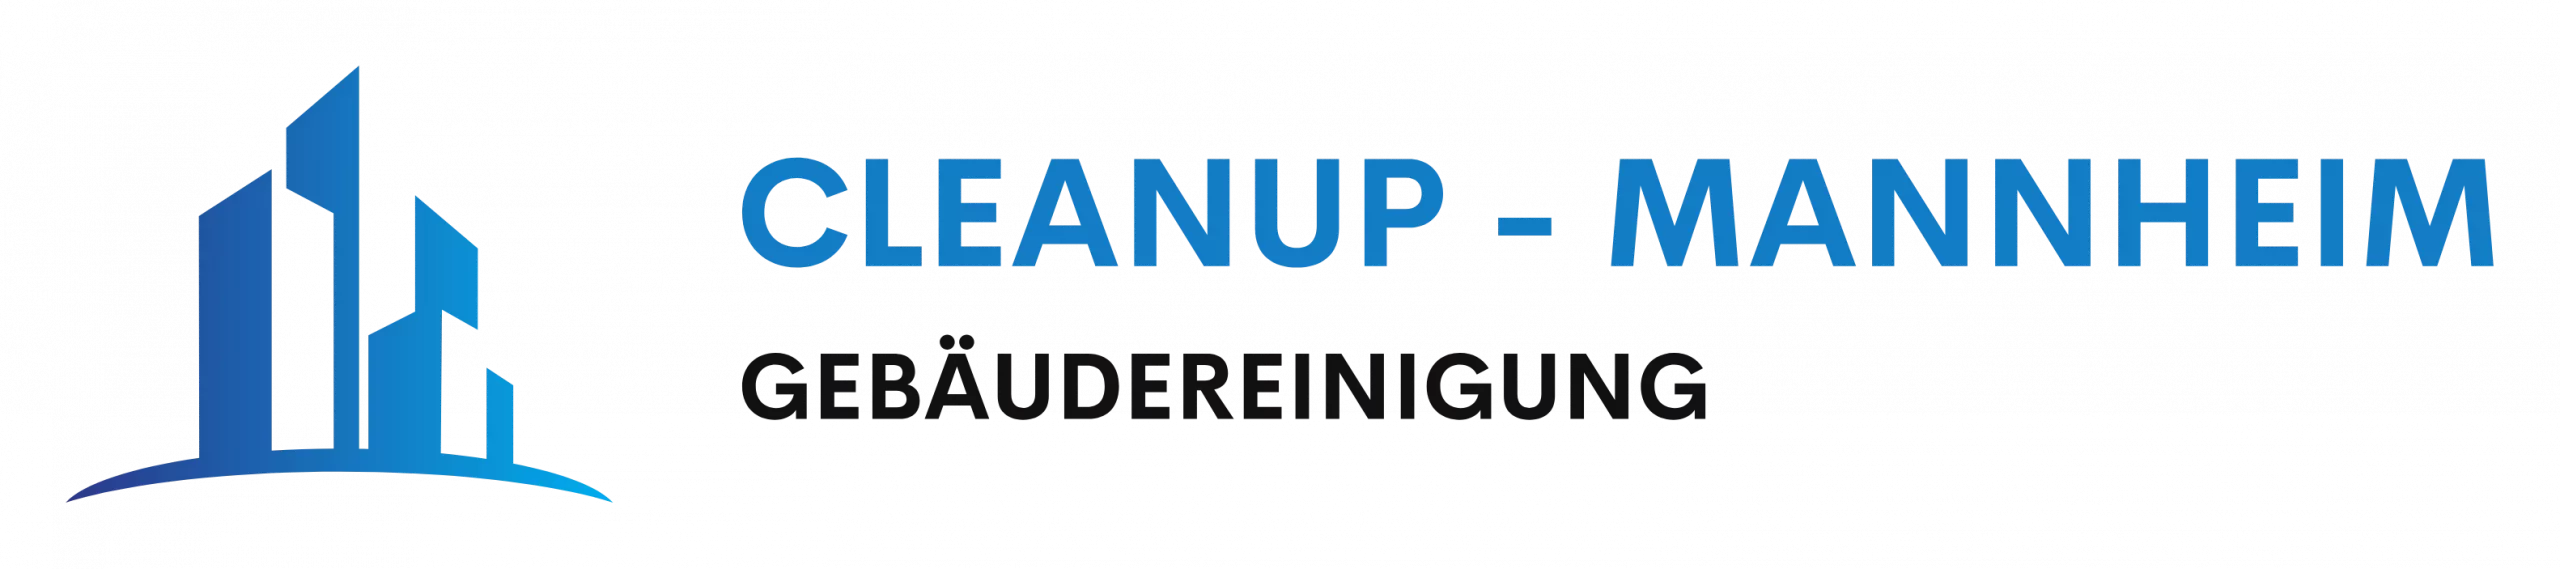 Cleanup Mannheim Logo